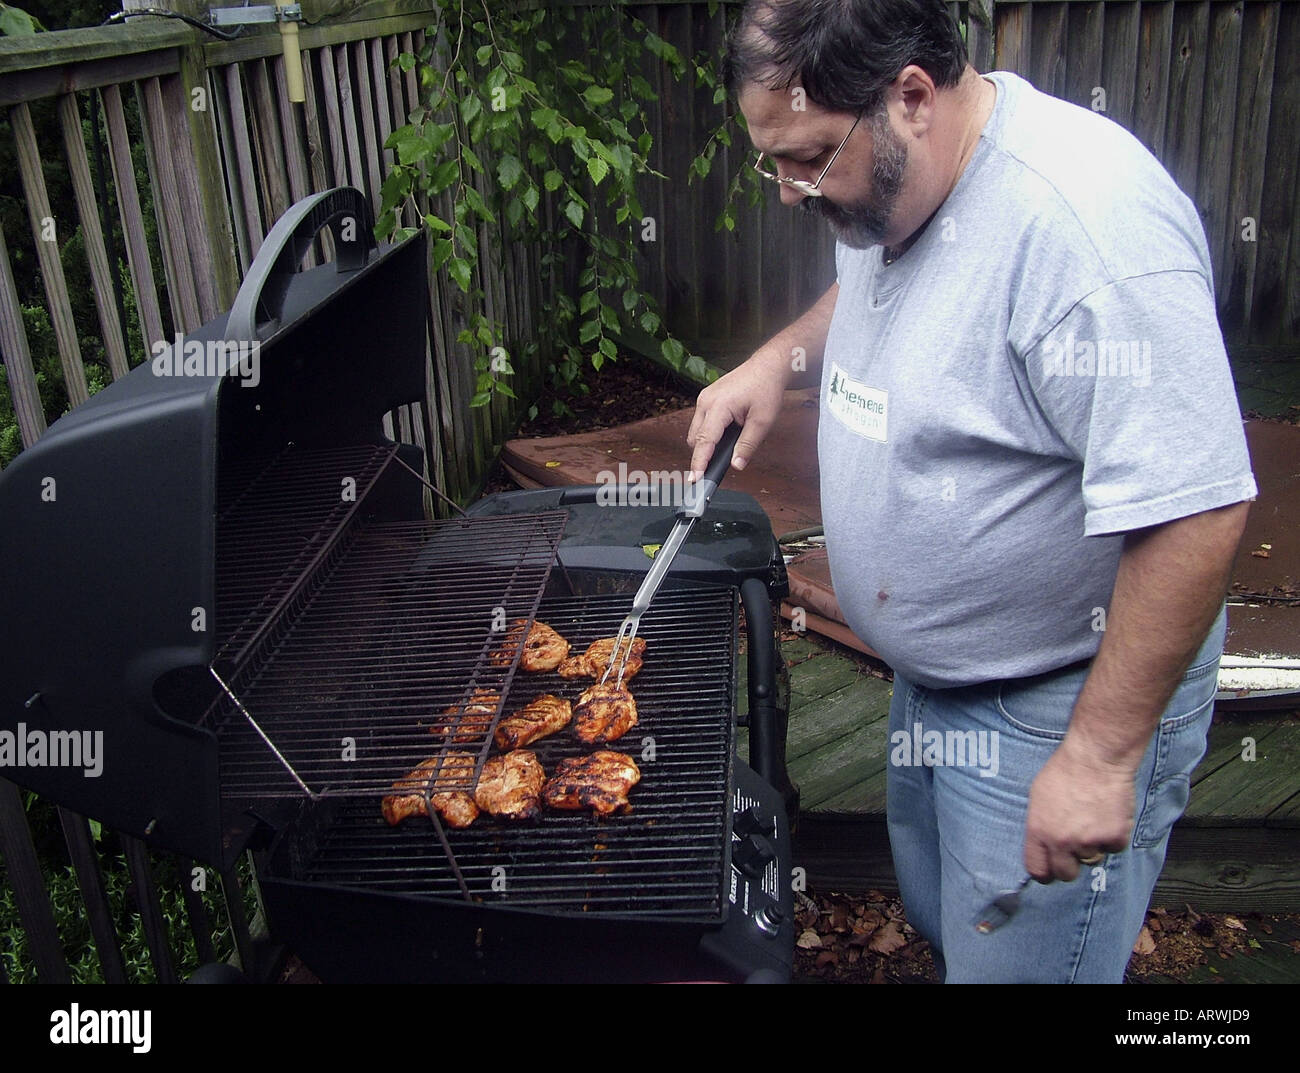 Aardewerk Wetland Vochtig man grilling chicken on barbeque grill Stock Photo - Alamy